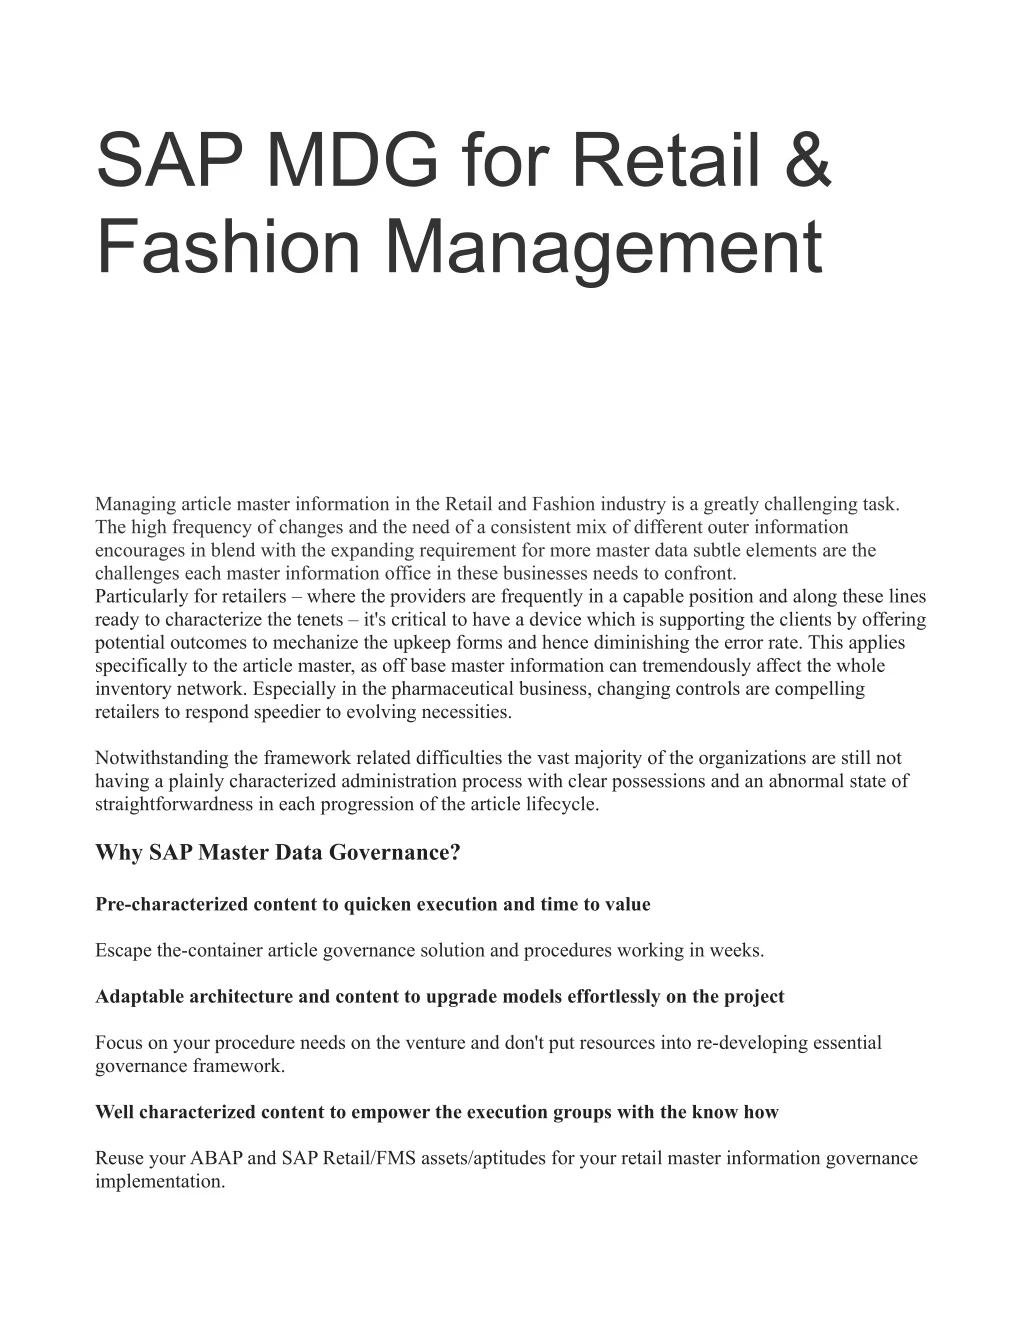 sap mdg for retail fashion management